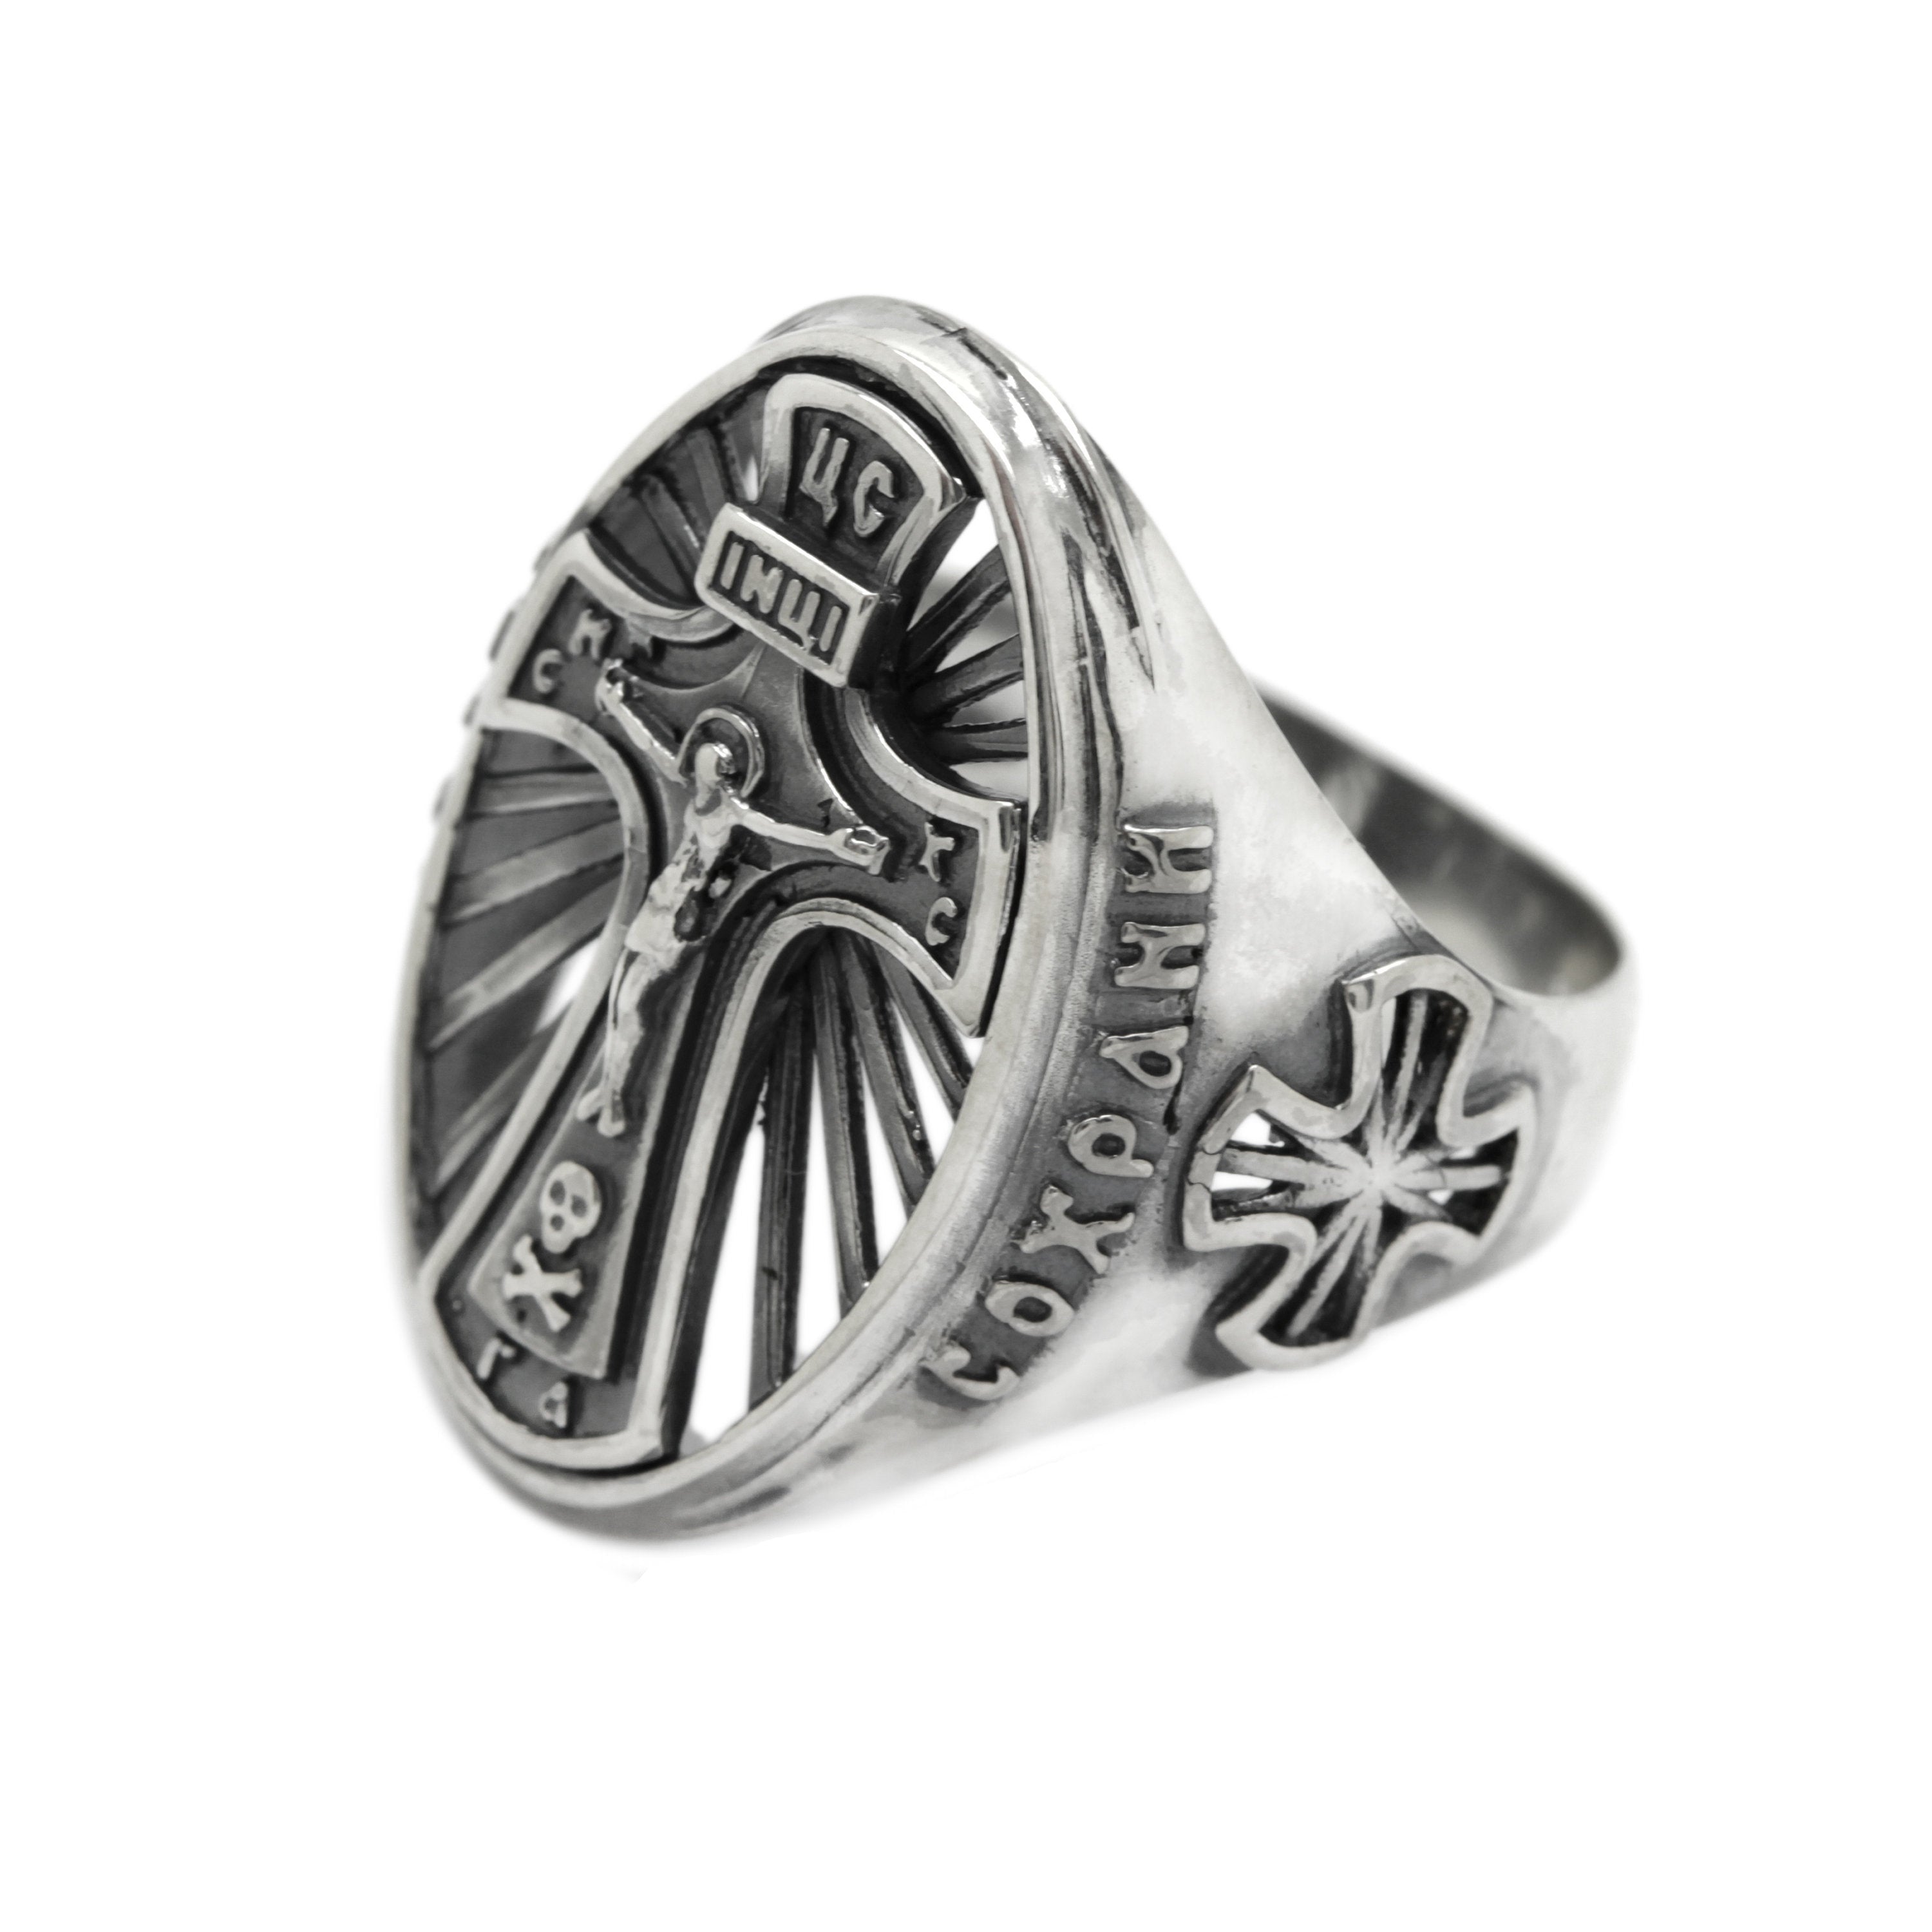 Jesus Christ Bless & Save Men's Ring Silver 925 – INDIGO jewelry